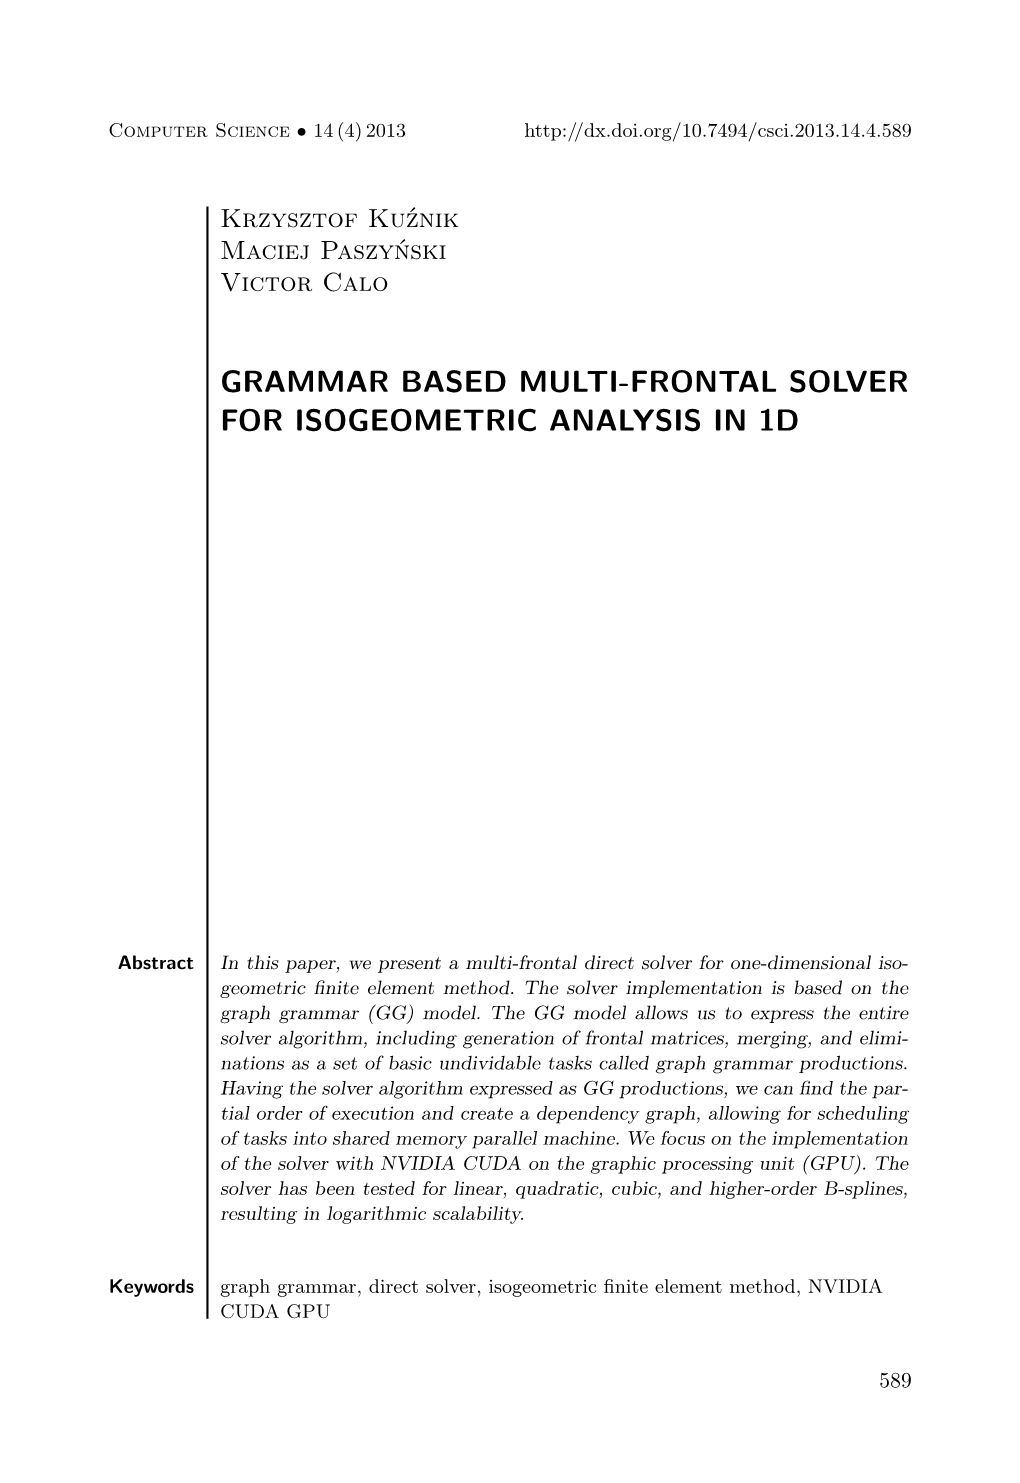 Grammar Based Multi-Frontal Solver for Isogeometric Analysis in 1D